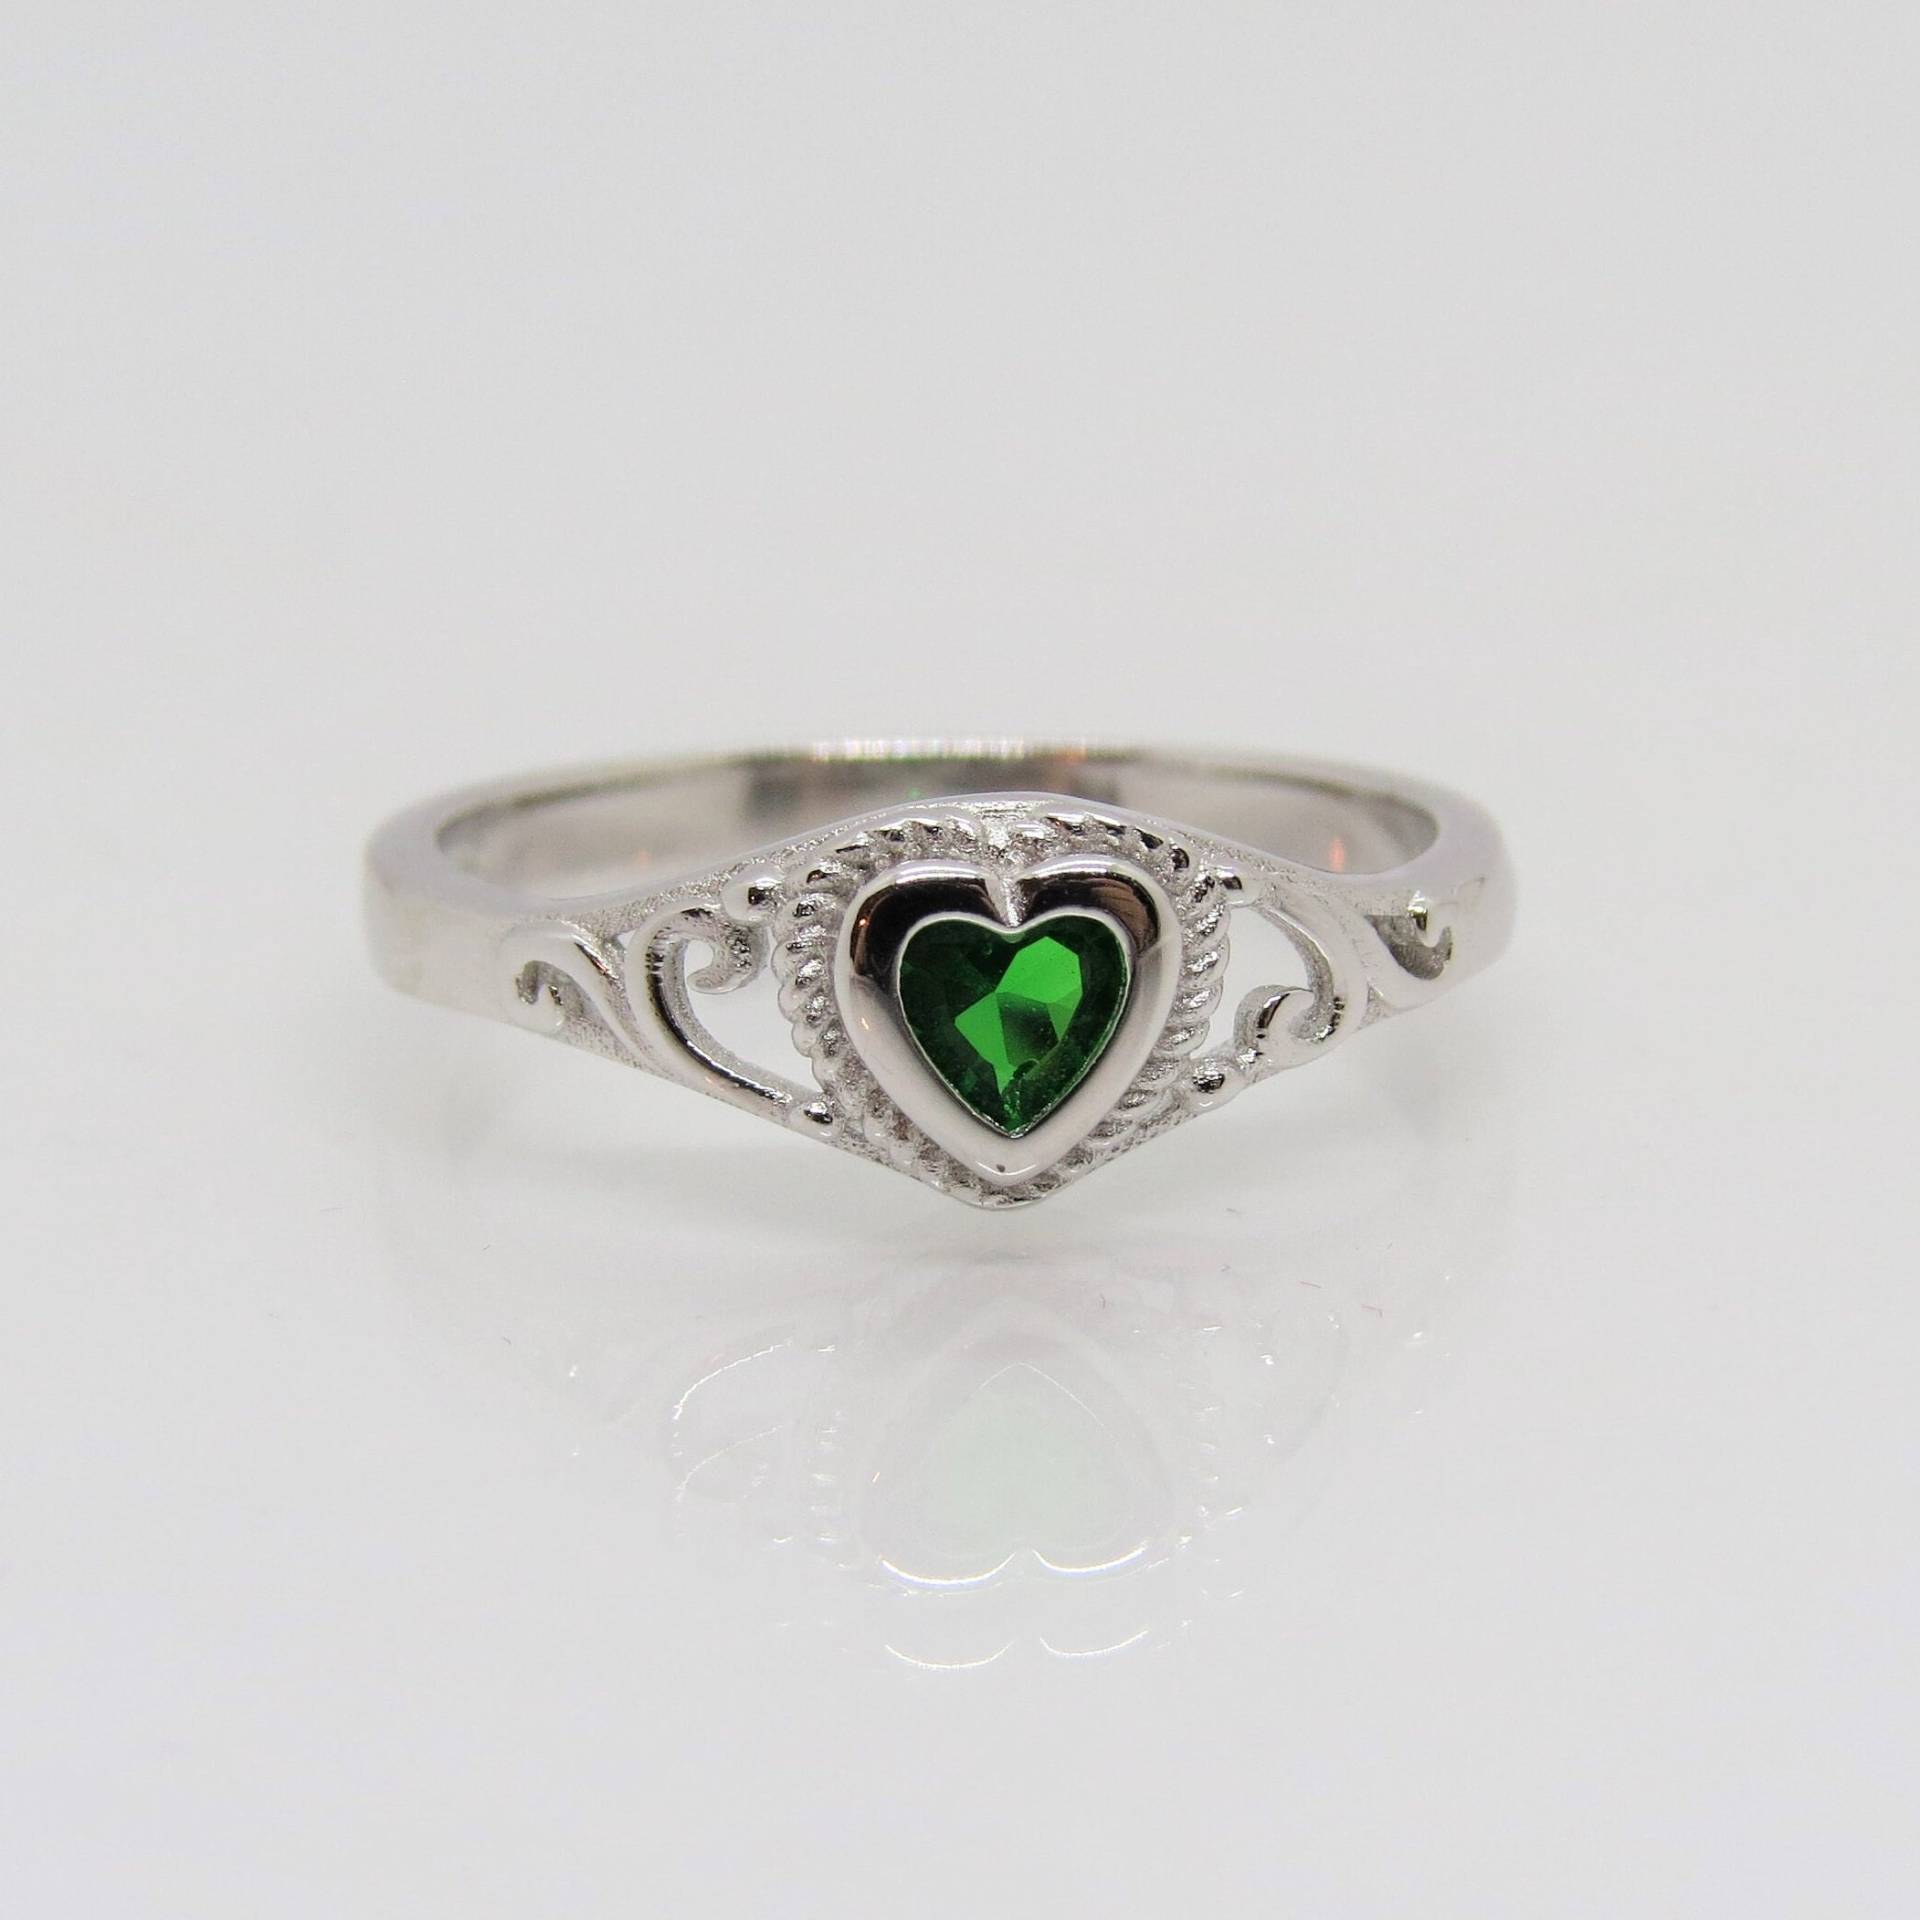 Vintage Sterling Silber Smaragd Herz Filigran Ring Größe 7 von wandajewelry2013